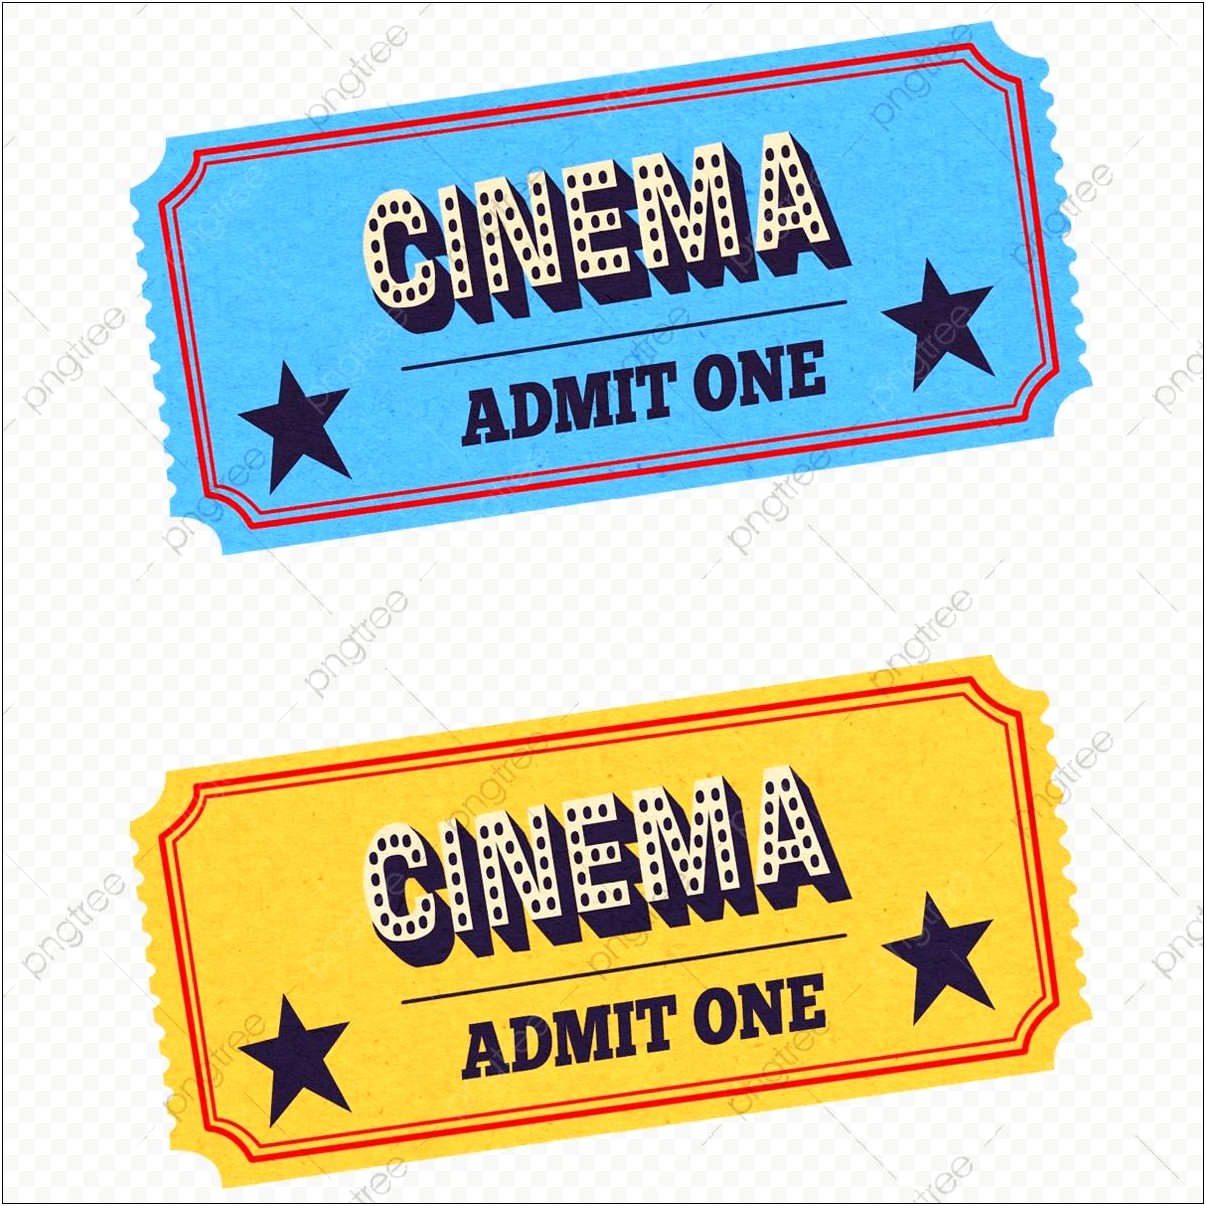 Movie Admit One Ticket Template Psd Download